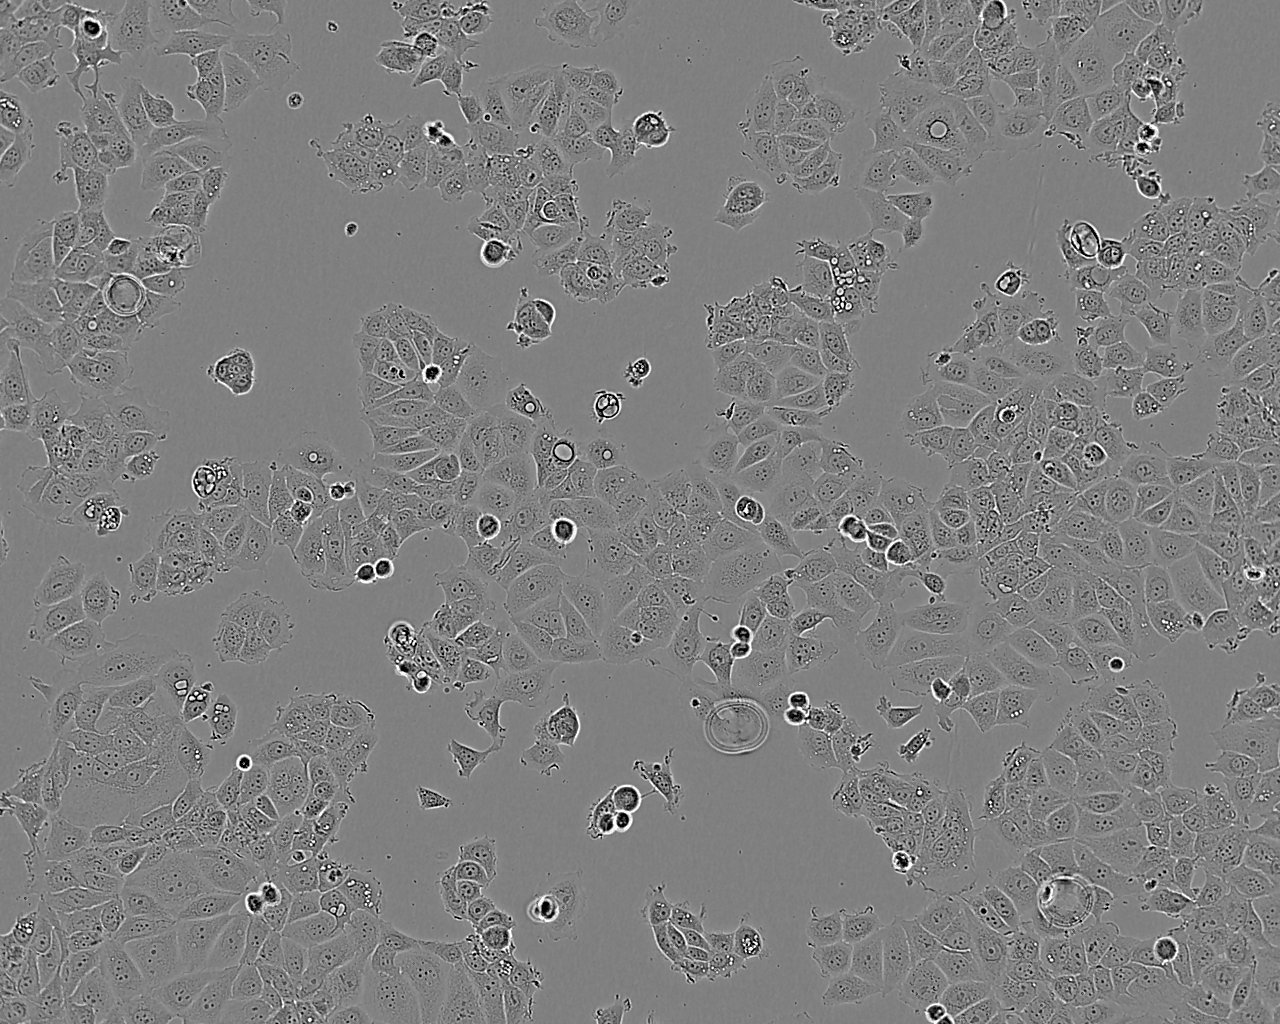 Fao epithelioid cells小鼠肝癌细胞系